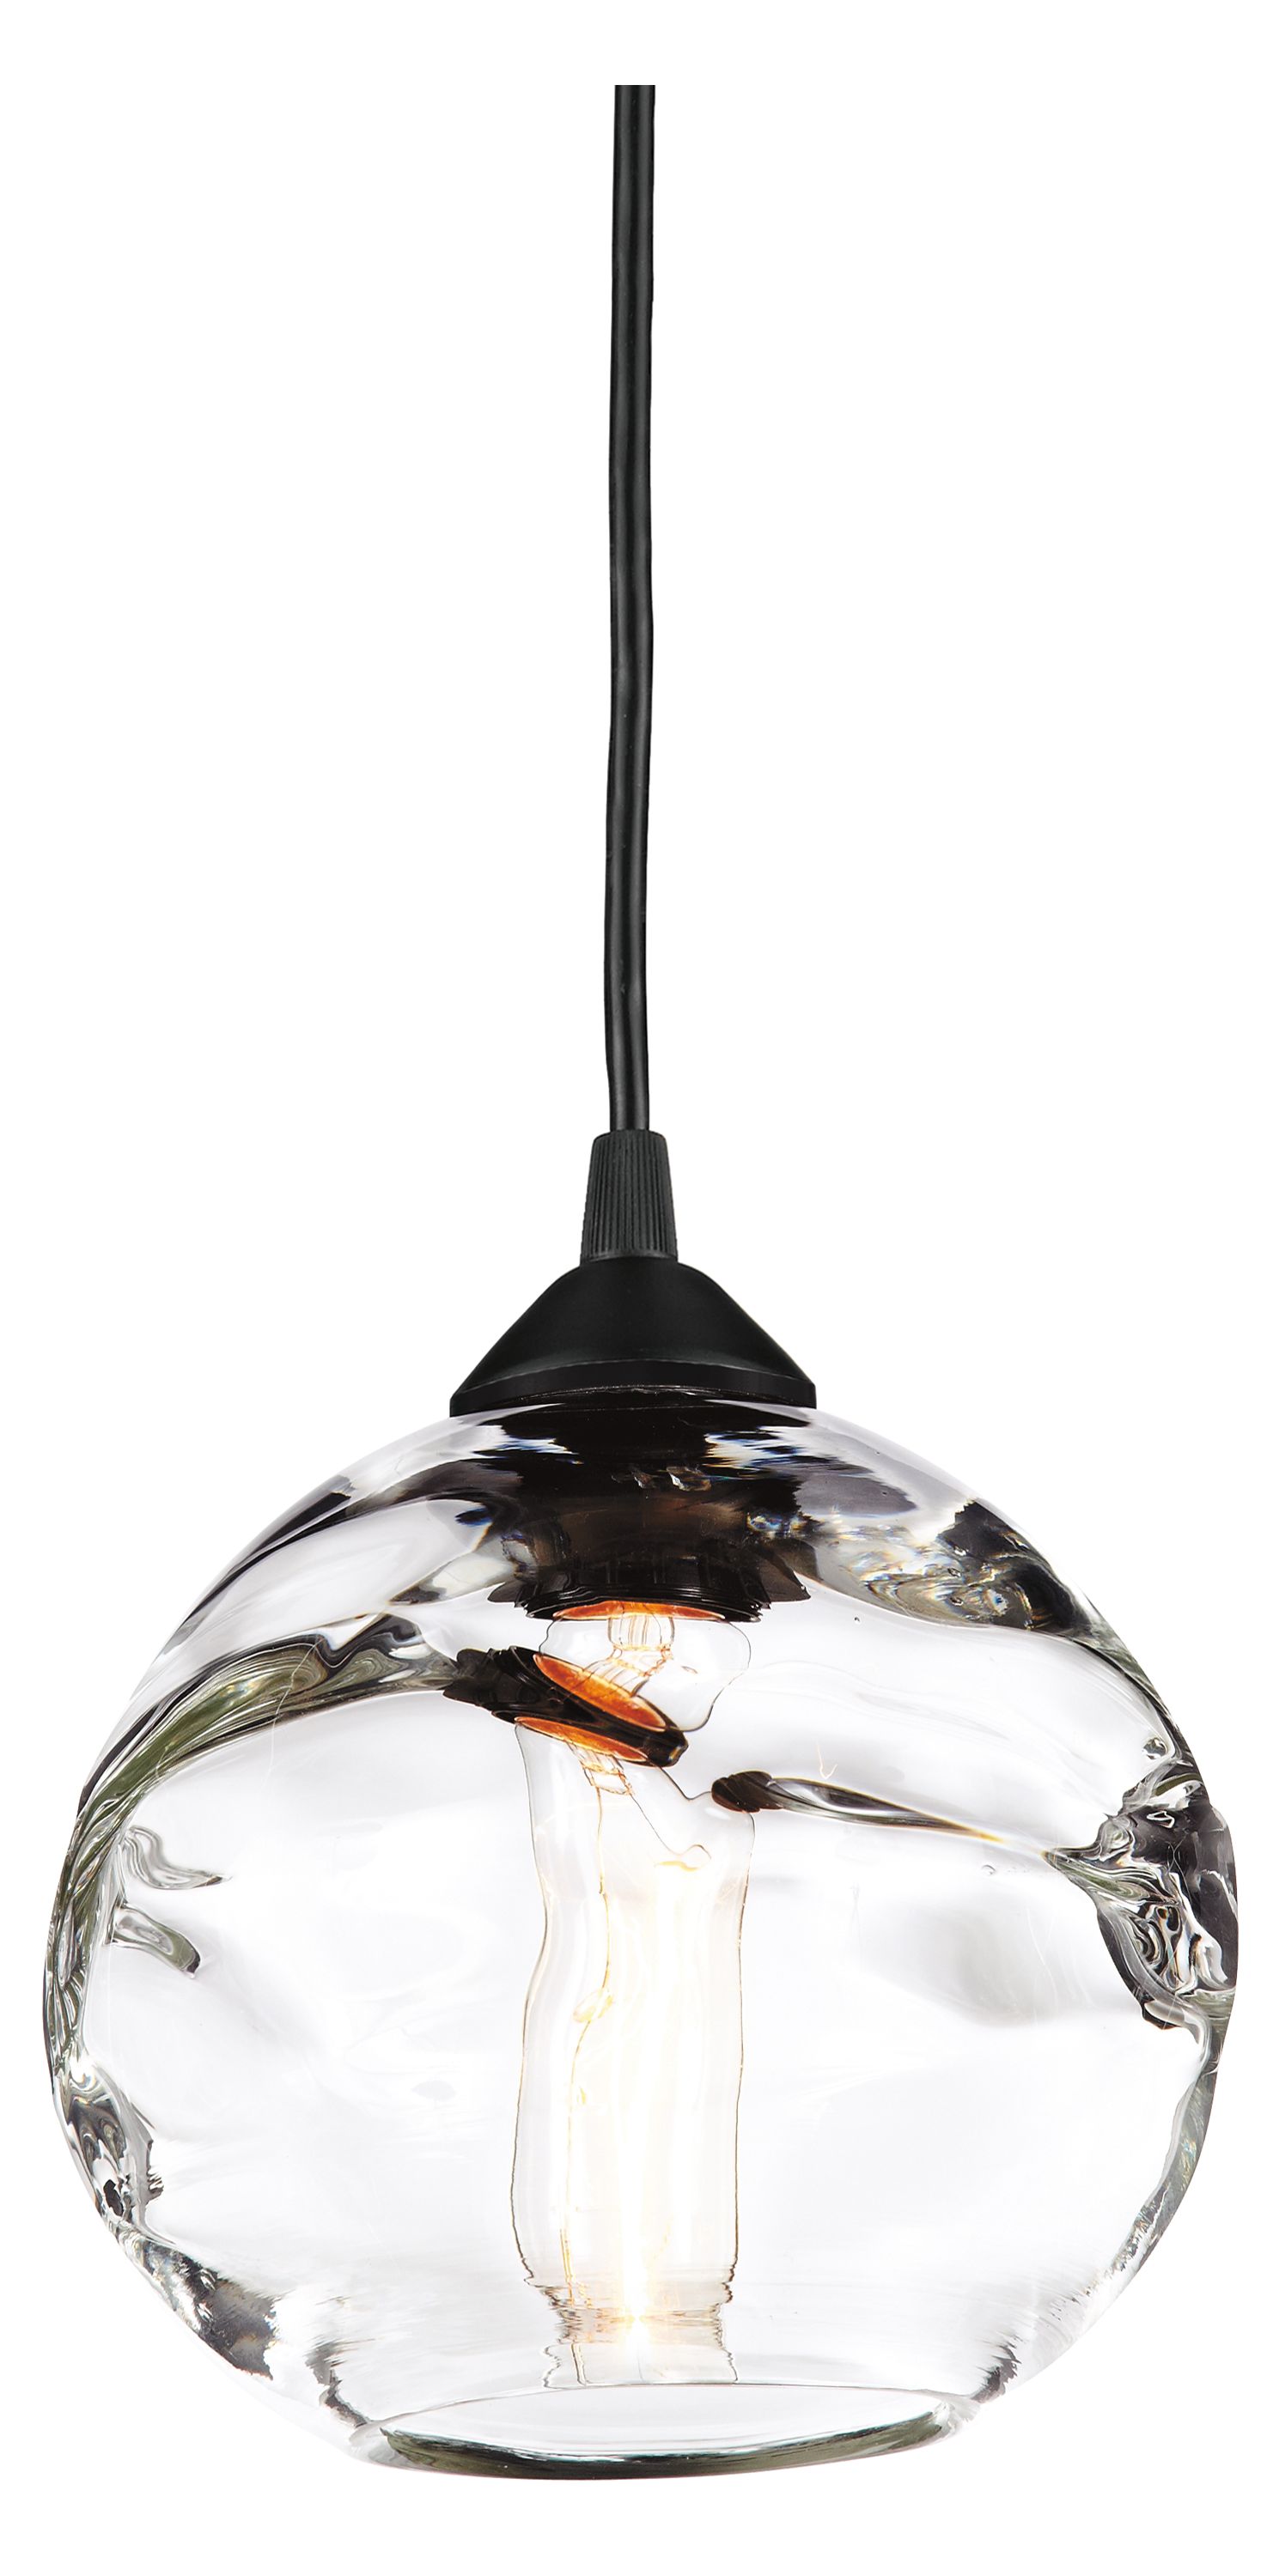 Hand-Blown Glass Pendant Light Fish Bowl Shade Ceiling Fixture